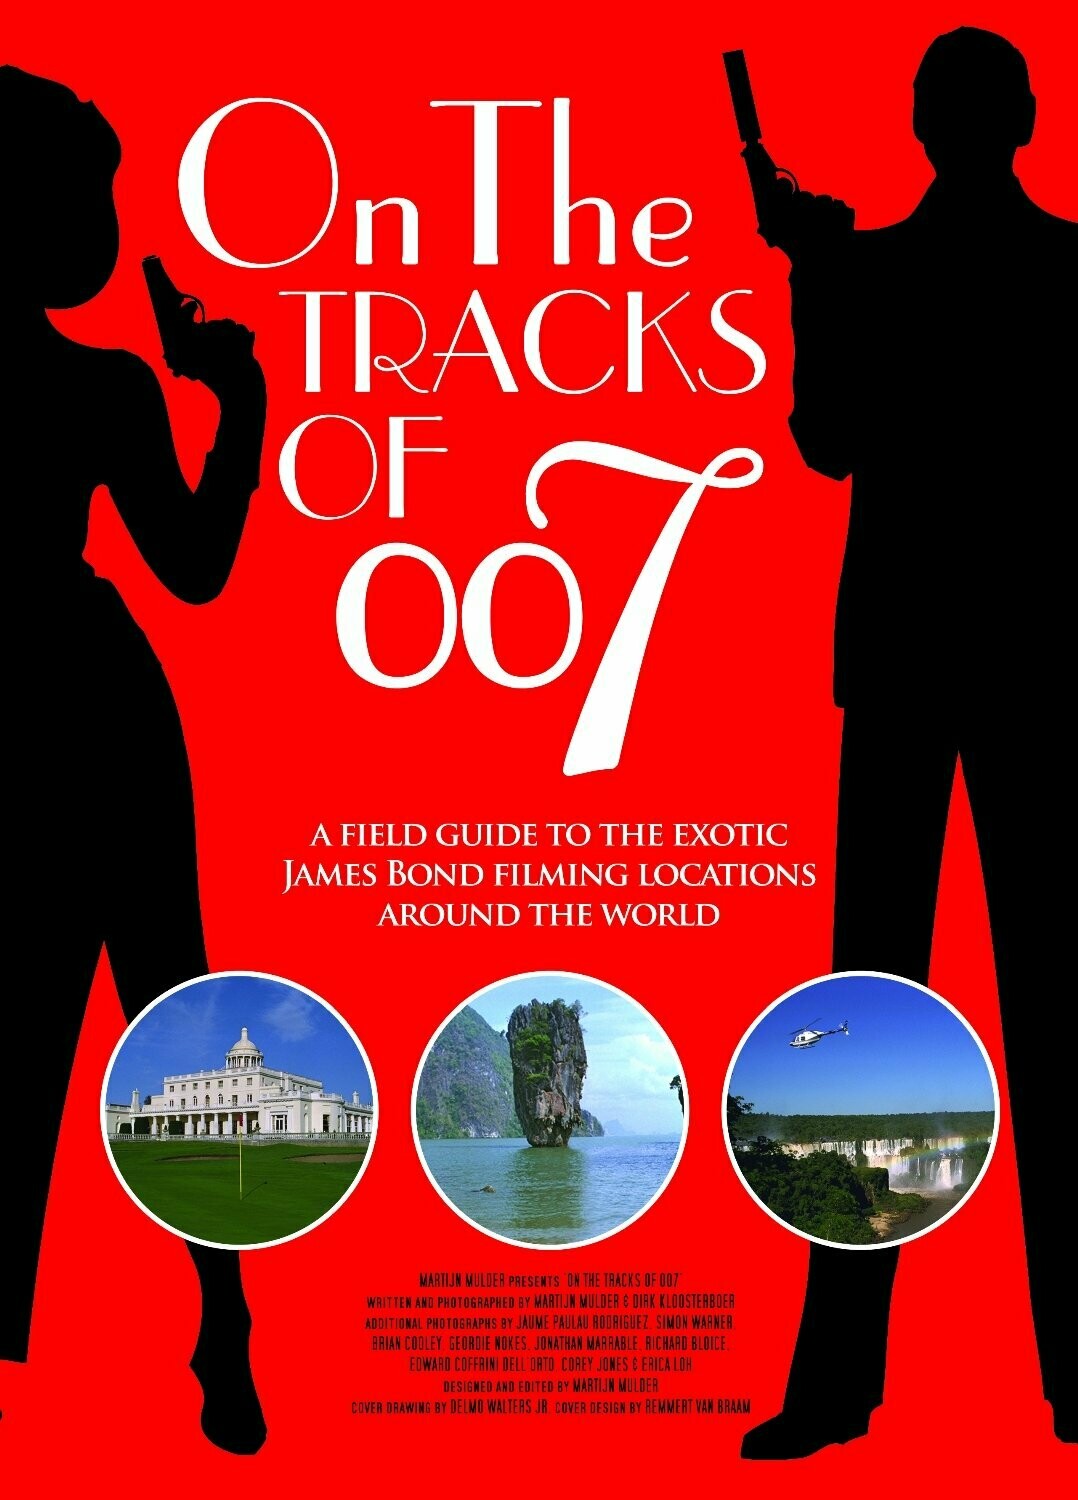 On the tracks of 007 - full colour - paperback